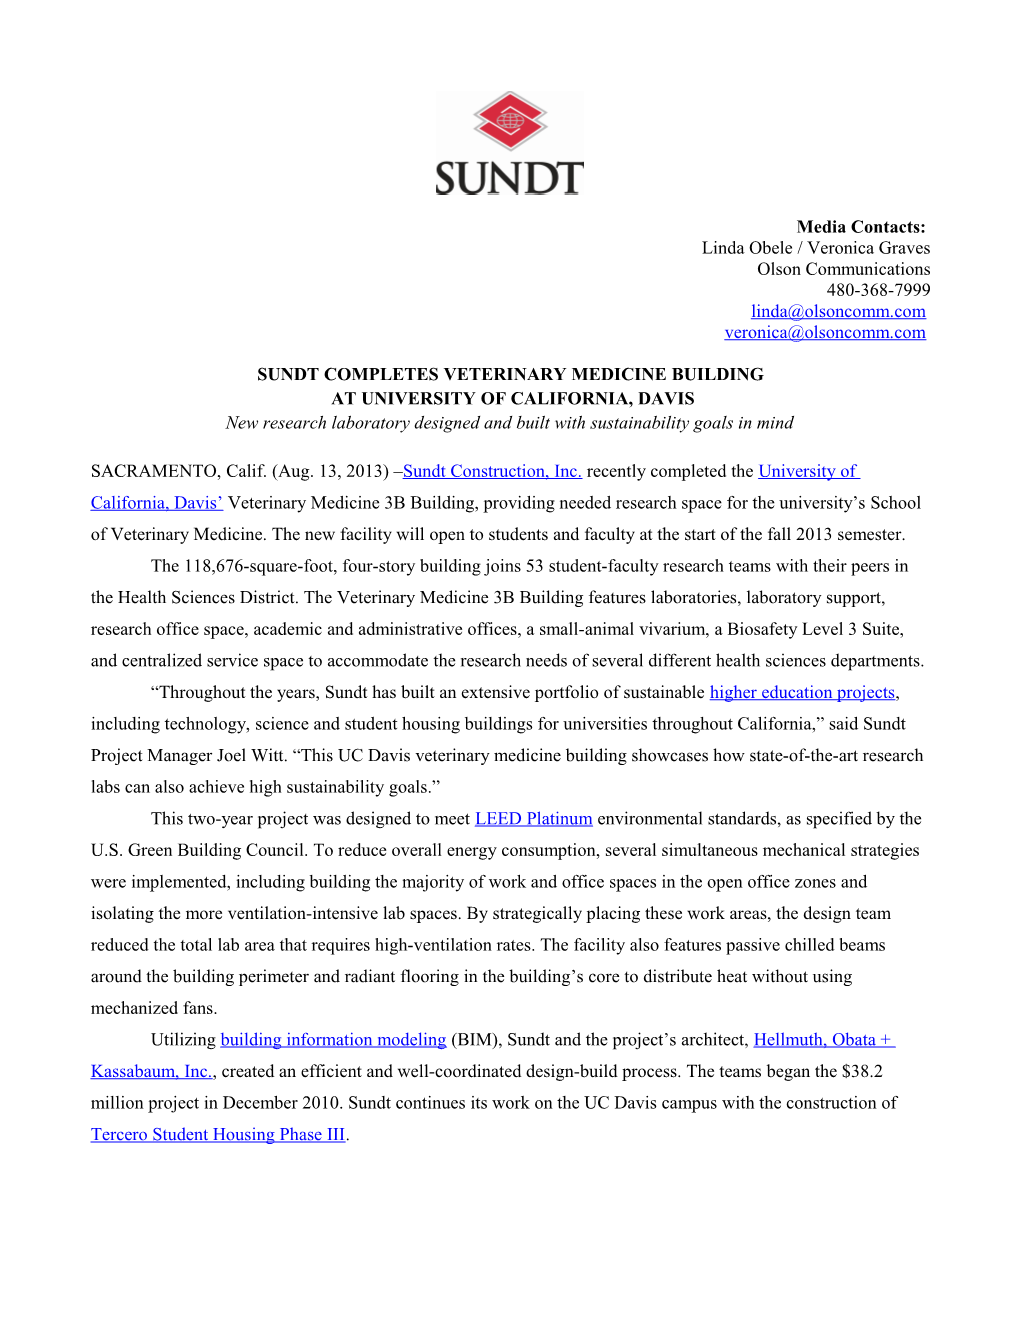 Sundt Construction, Inc